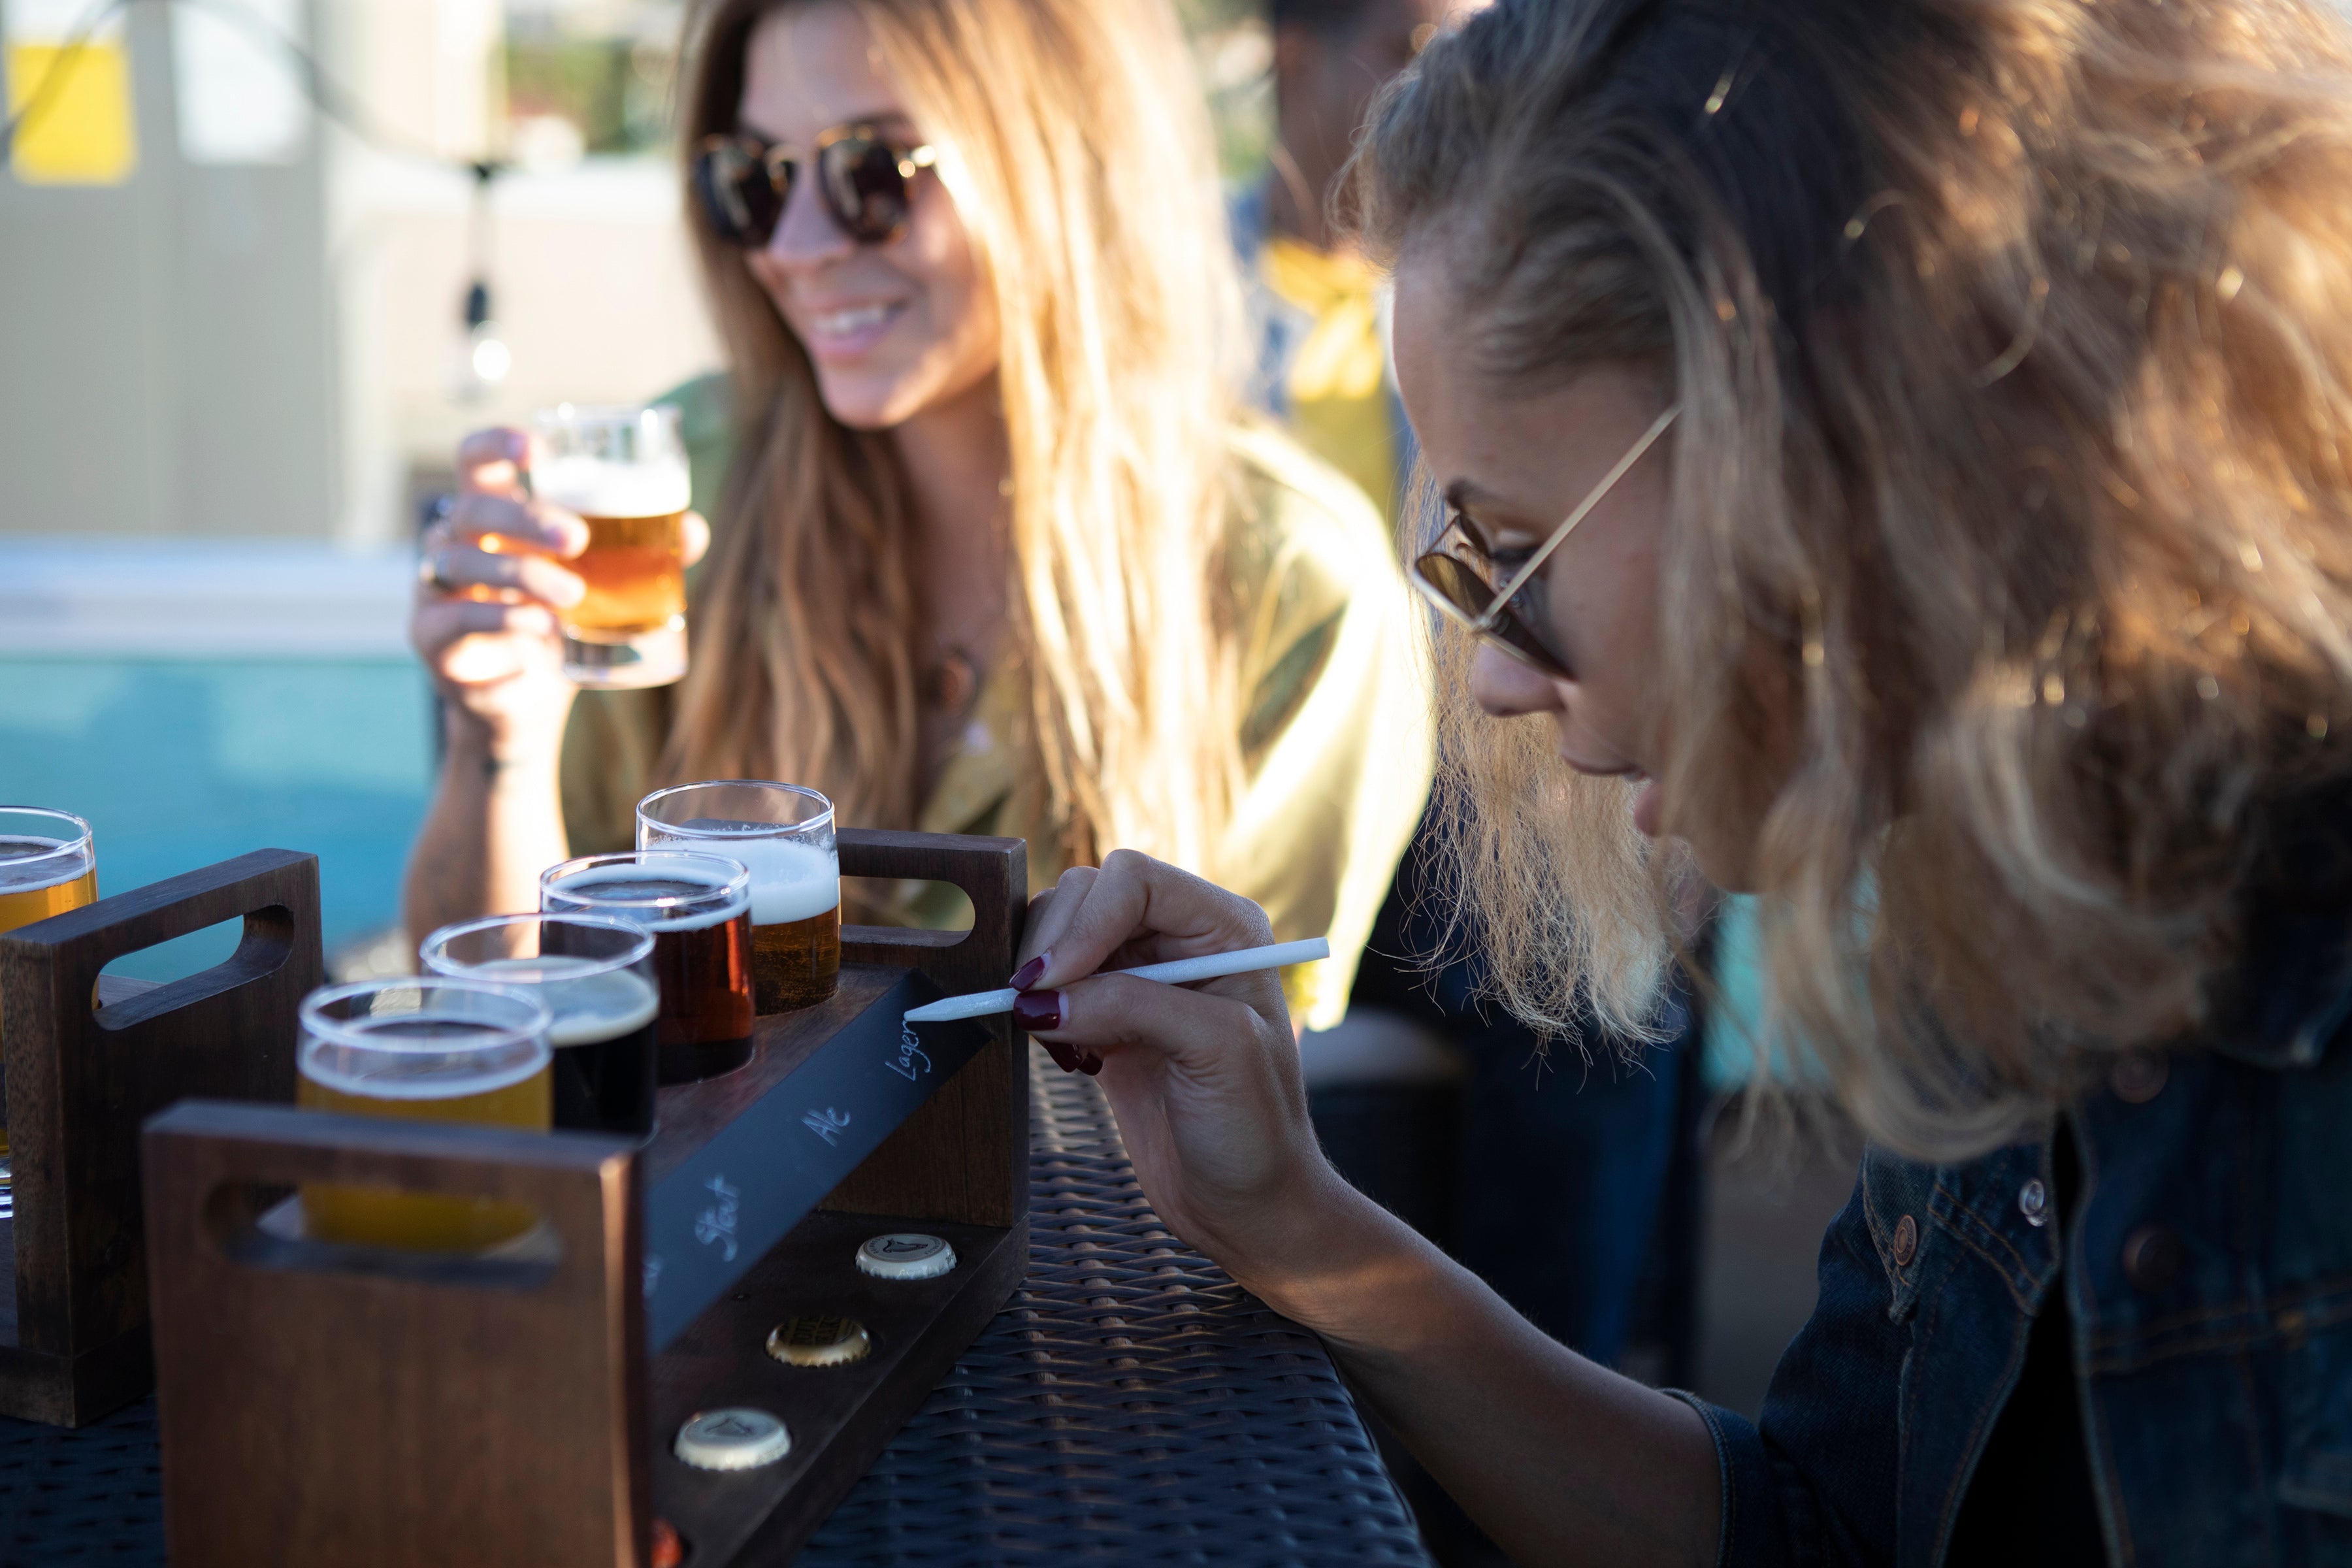 Los Angeles Chargers - Craft Beer Flight Beverage Sampler